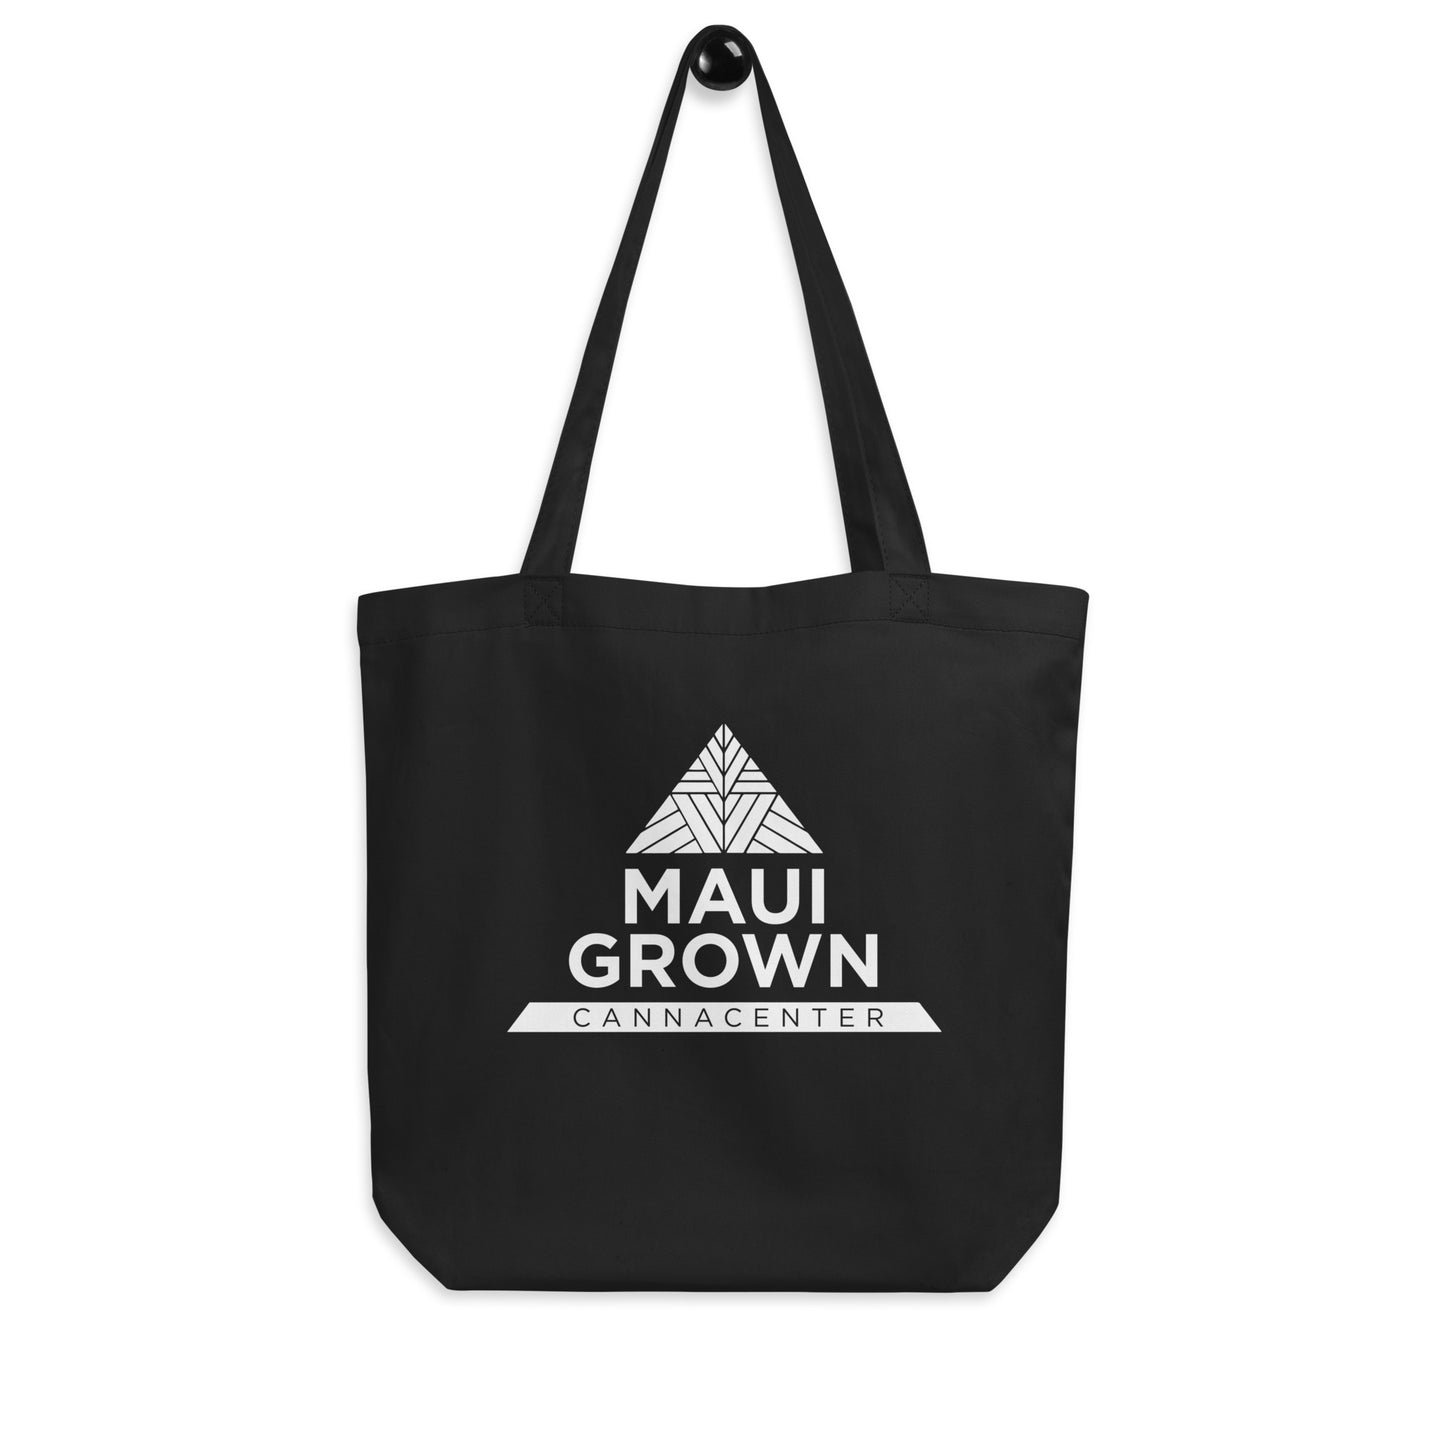 Maui Grown Cannacenter Eco Tote Bag - Black